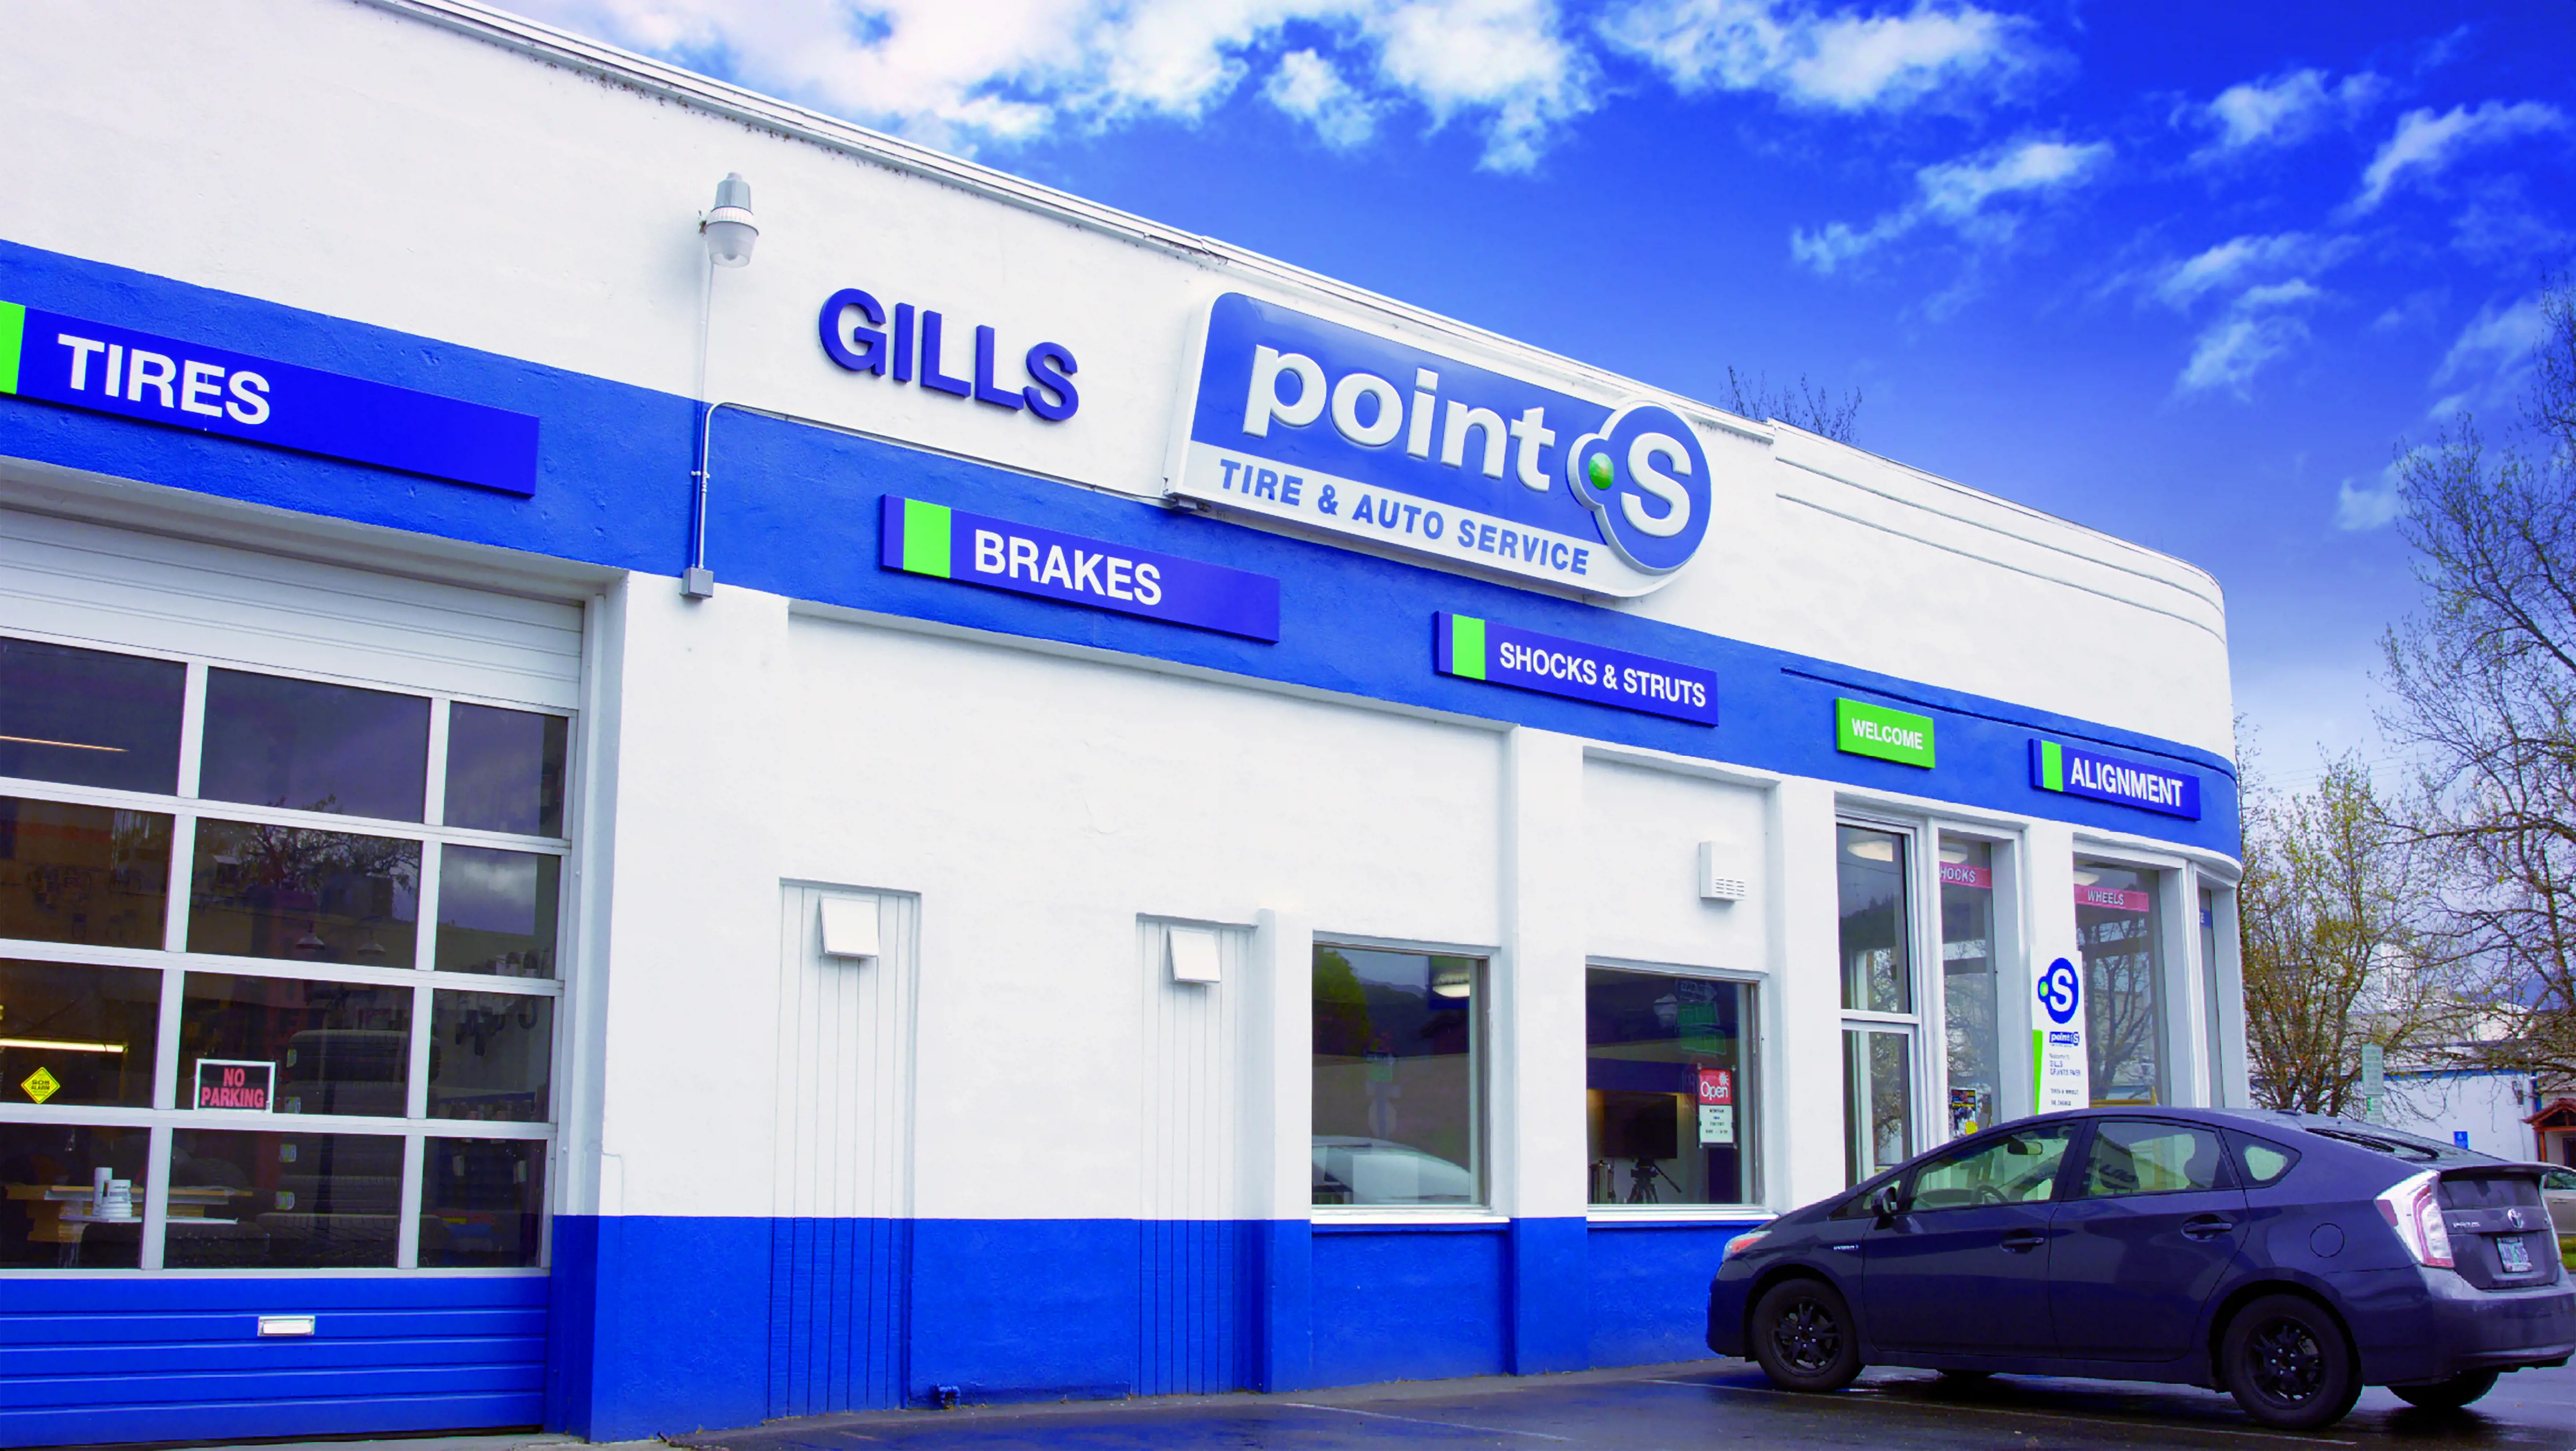 Gills Point S Tire & Auto - Grants Pass